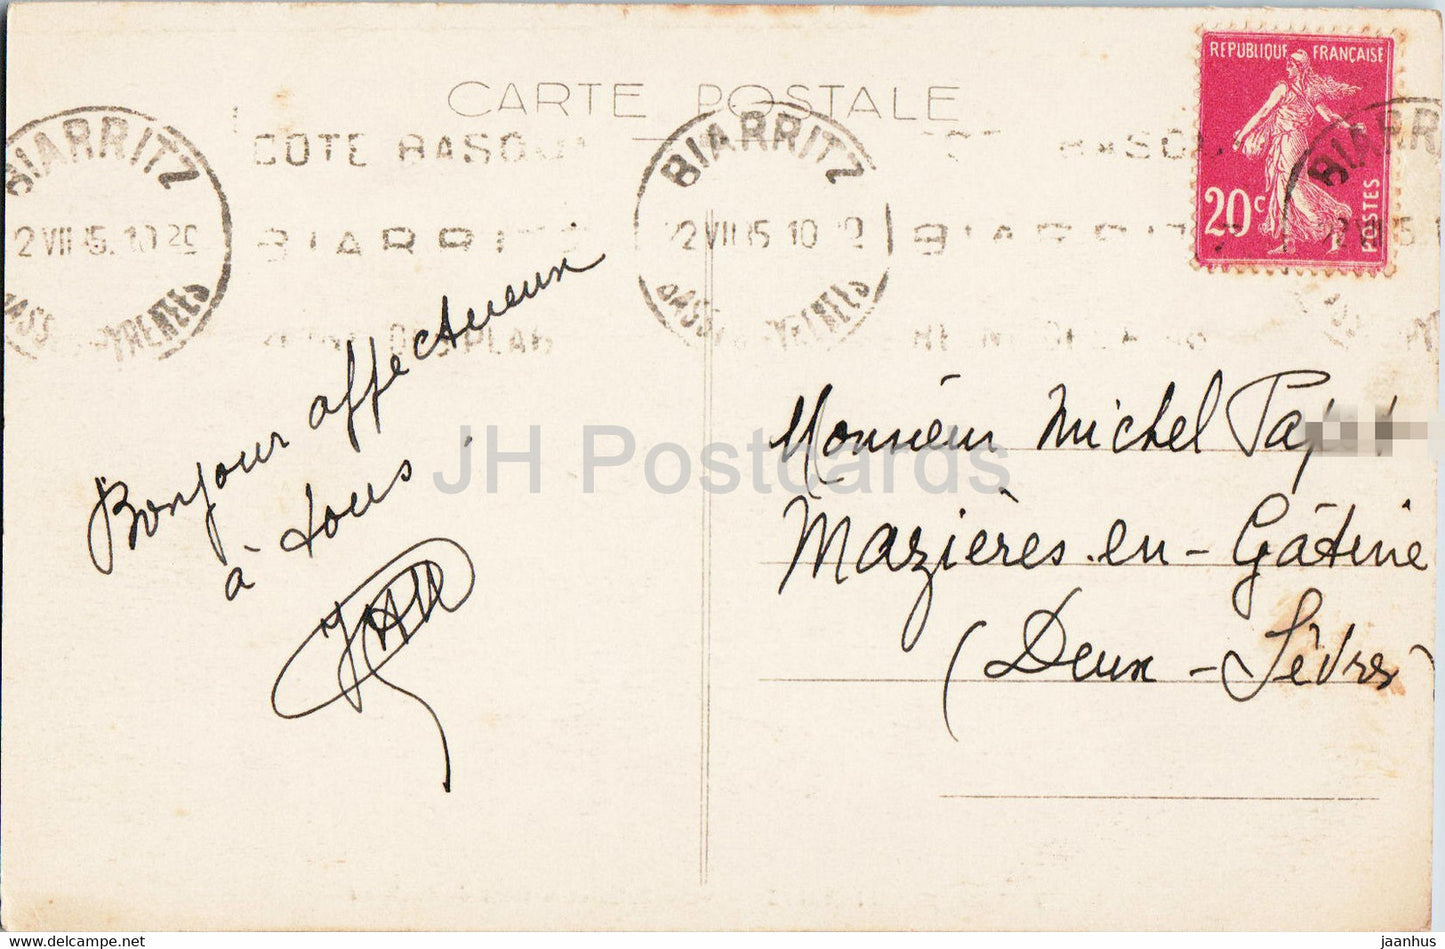 Biarritz - Villa Belza et la Dent du Cachaou - 19 - old postcard - 1935 - France - used